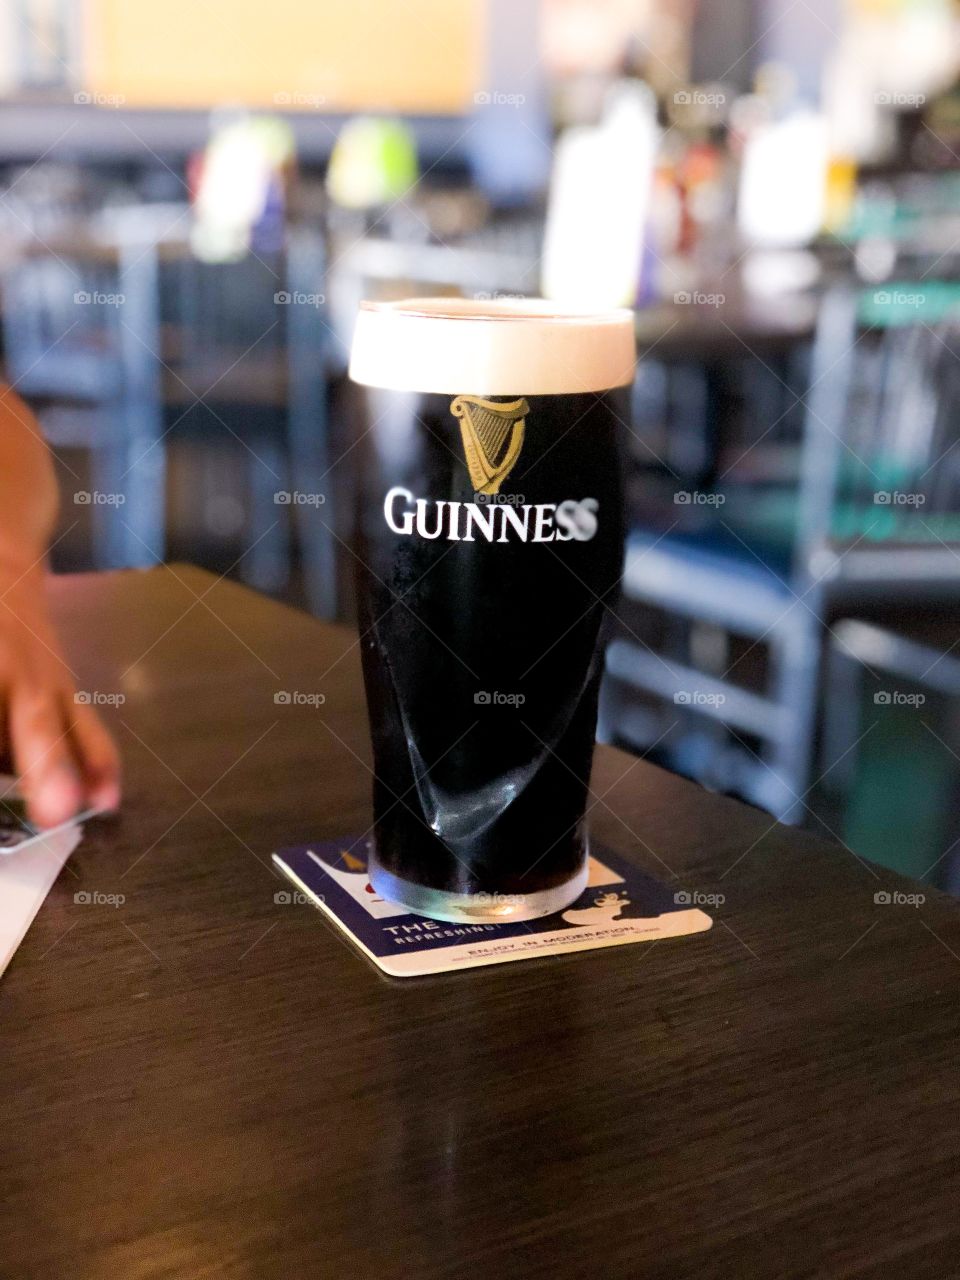 Enjoying Guinness at the pub